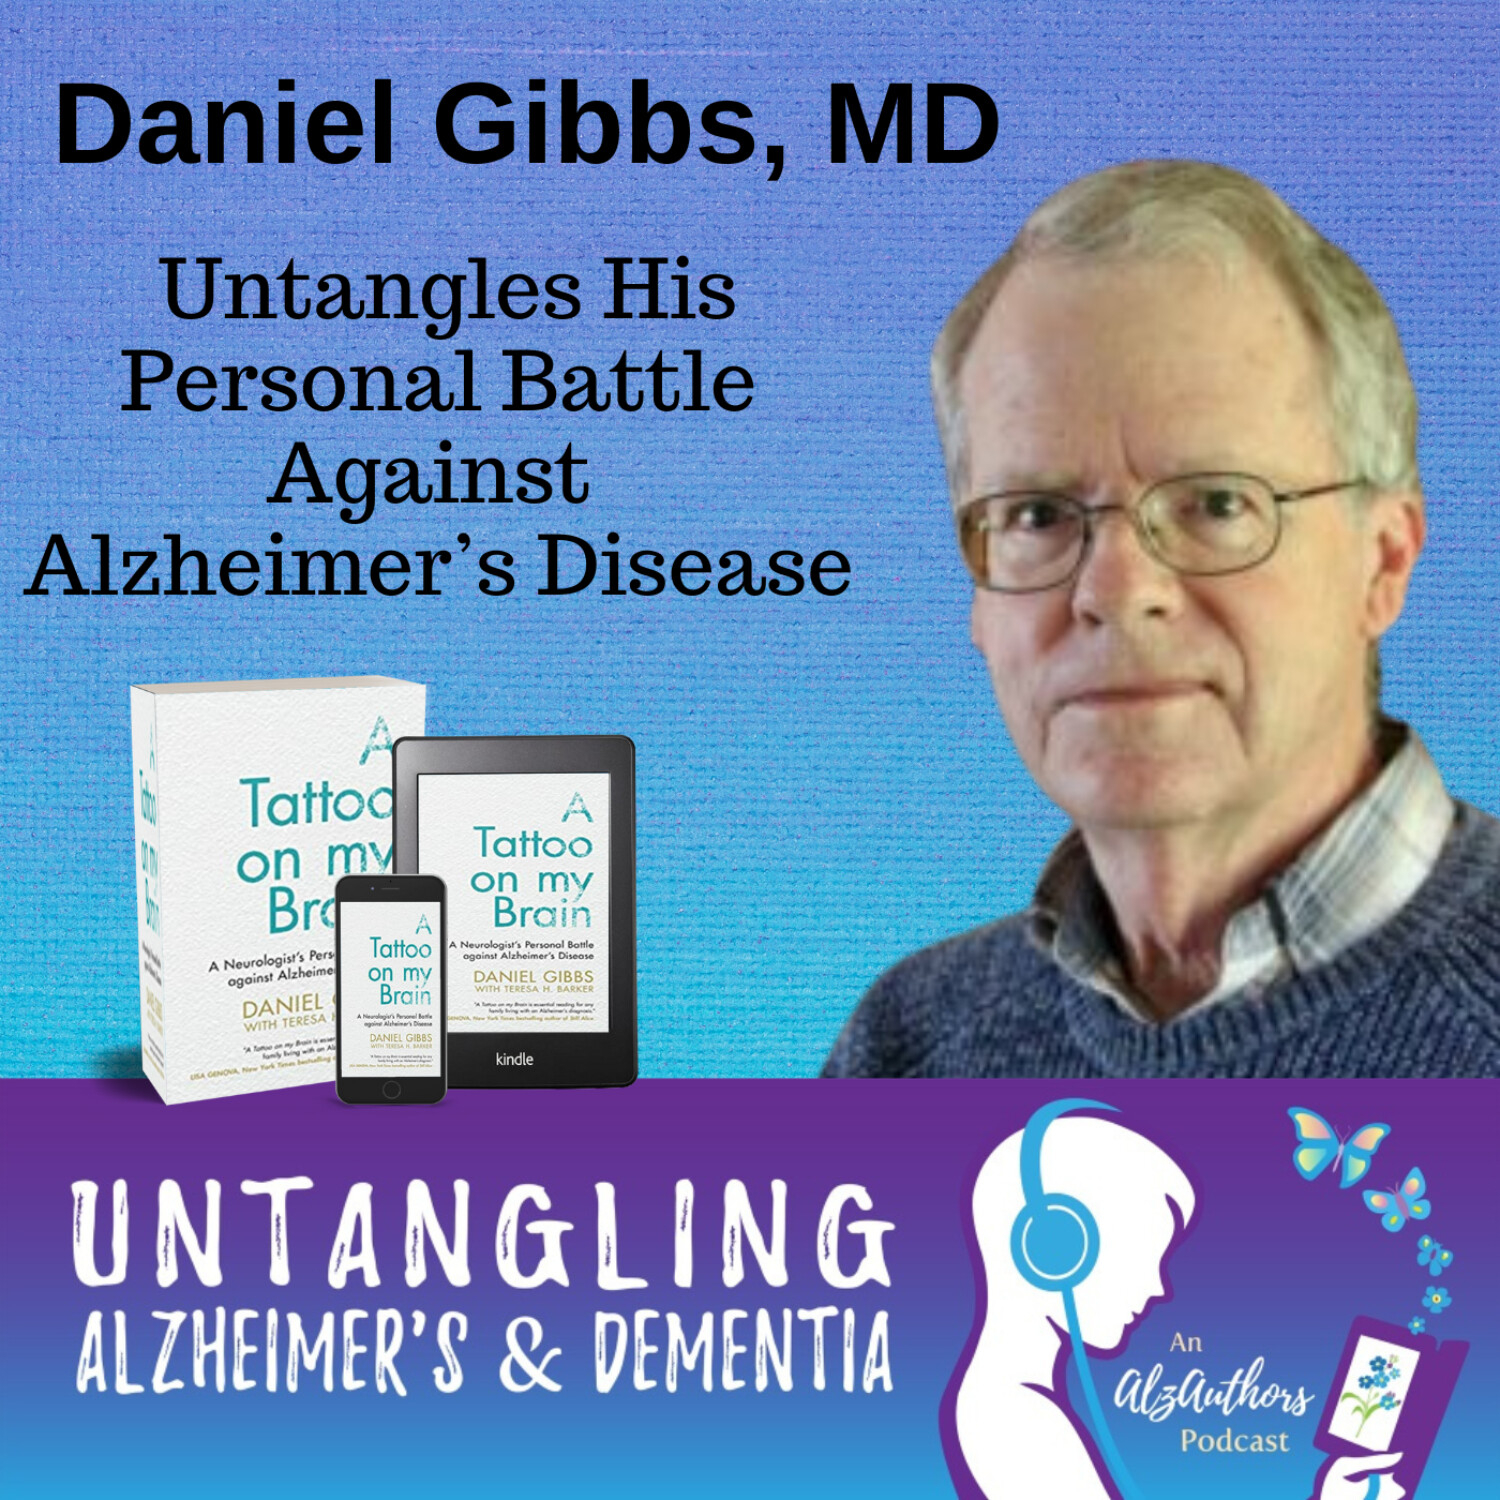 Daniel Gibbs, MD Untangles His Personal Battle Against Alzheimer’s Disease